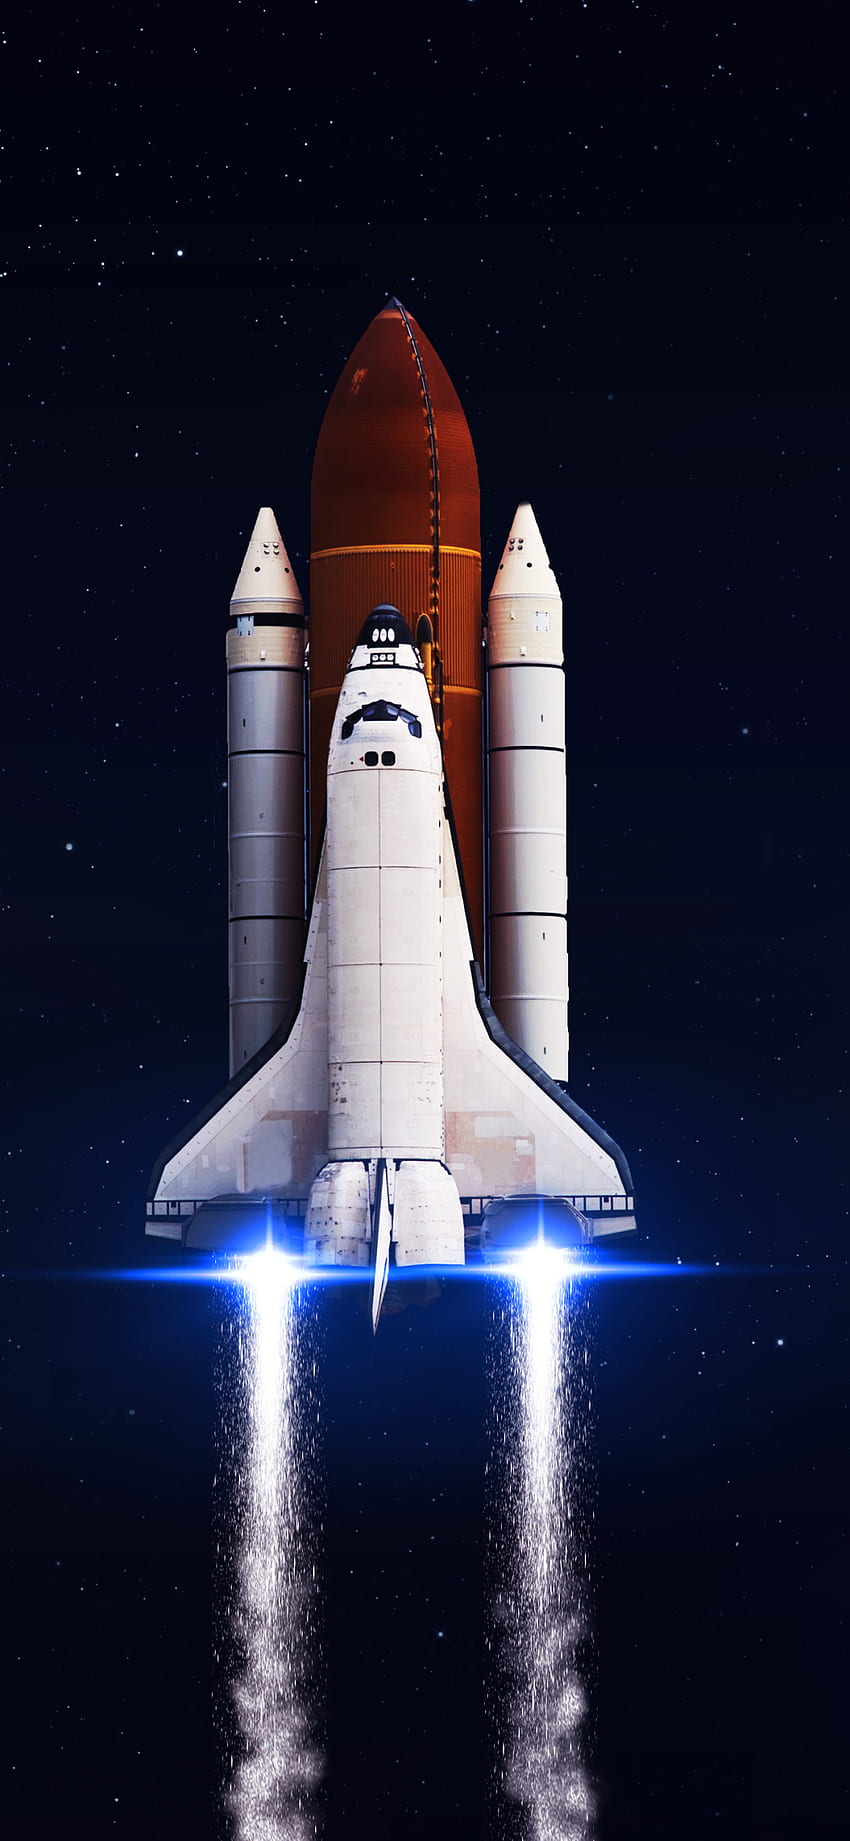 Photo wallpapers Space Shuttle Endeavour | Shop online